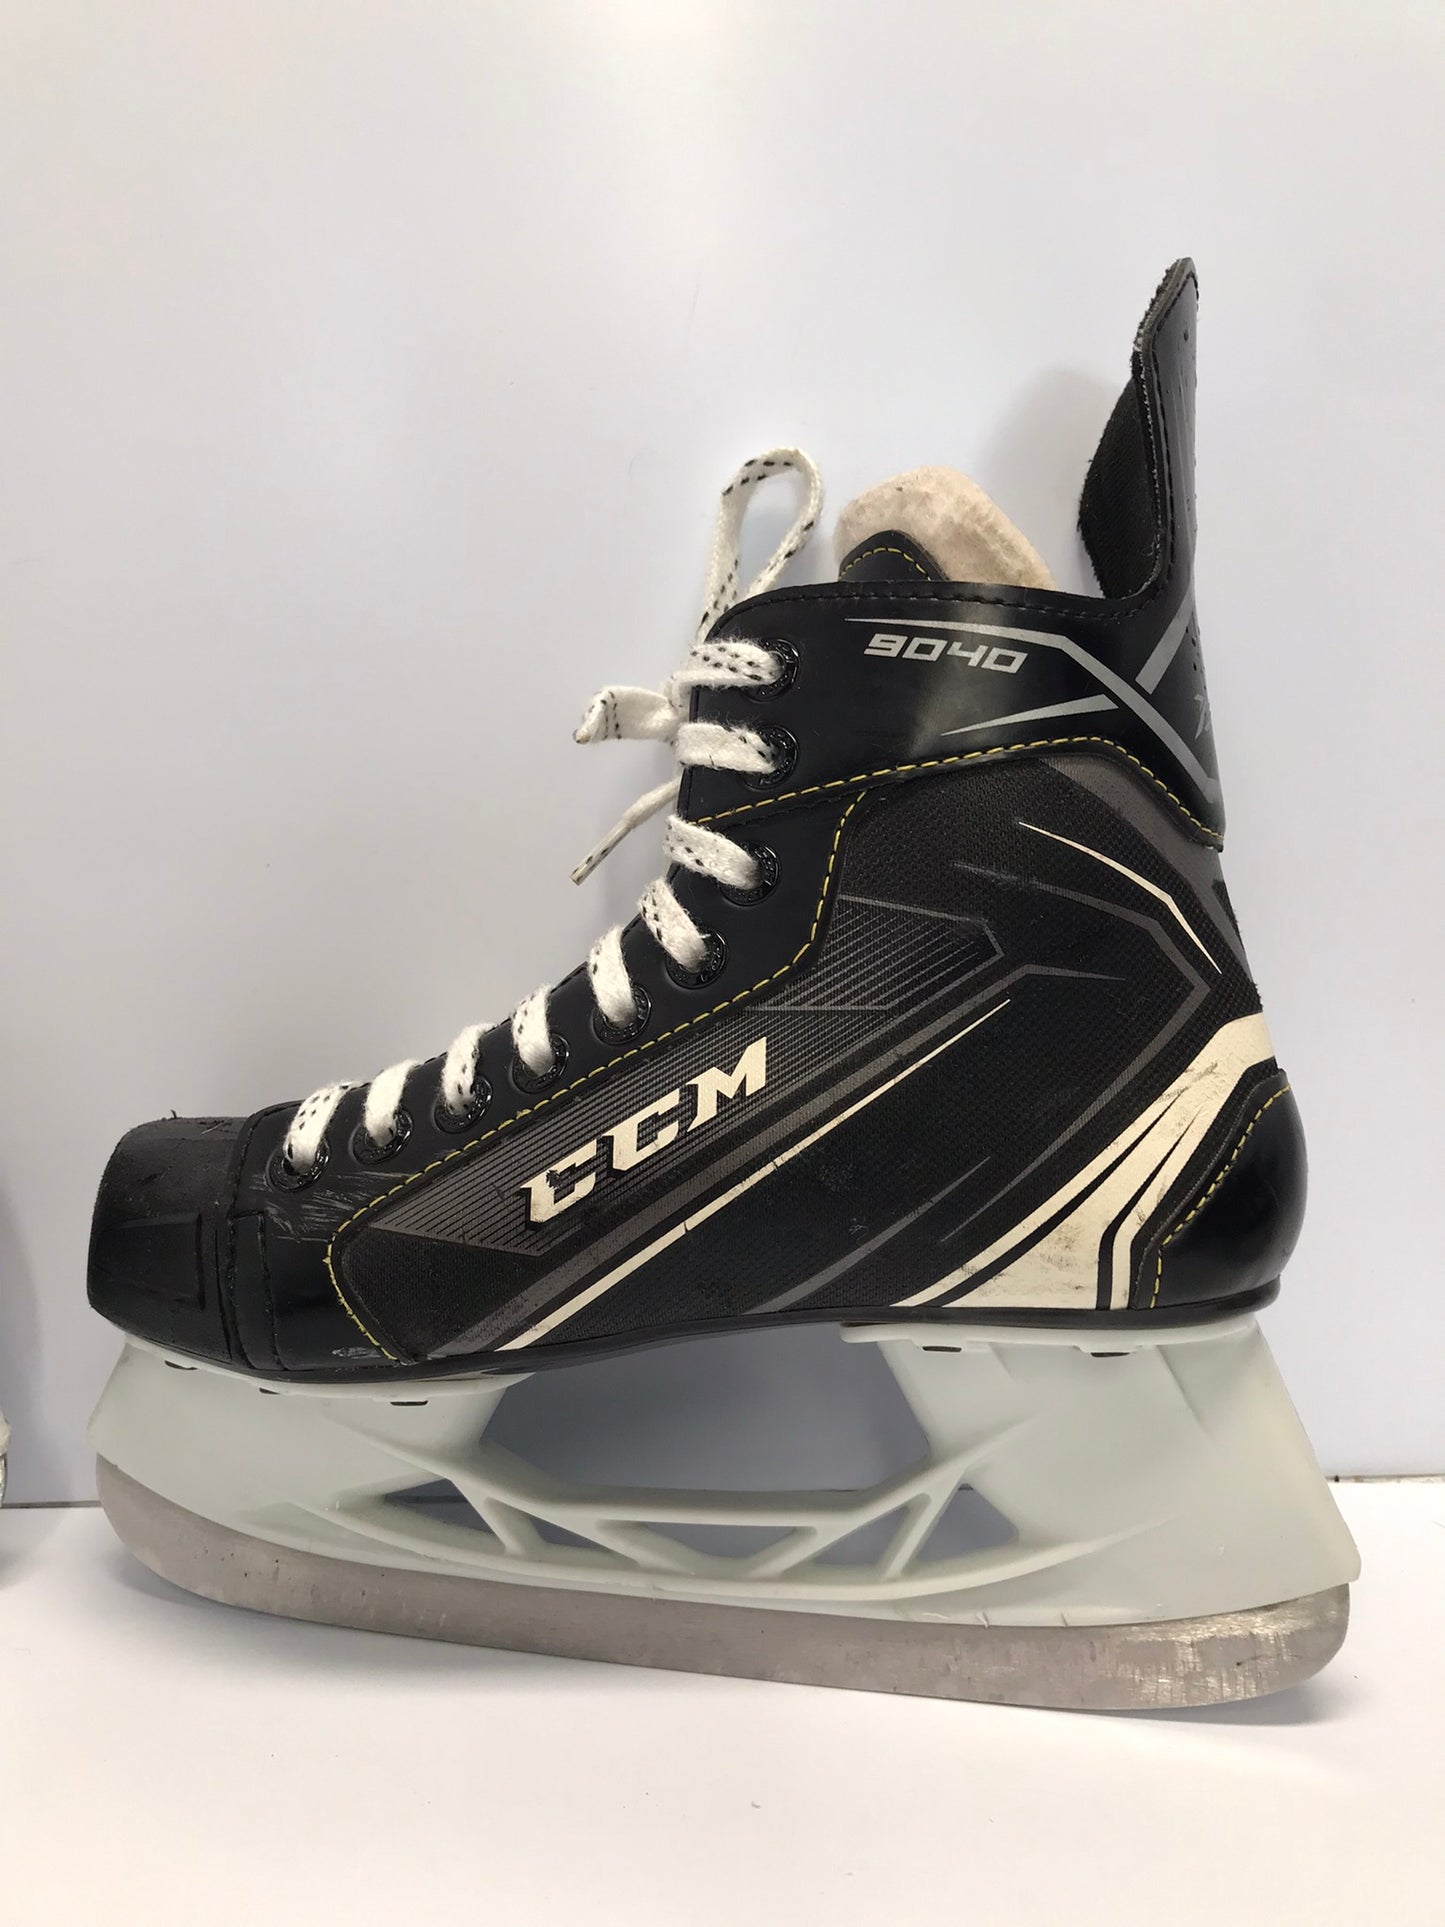 Hockey Skates Child Size 3 Shoe Size CCM Tacks Excellent